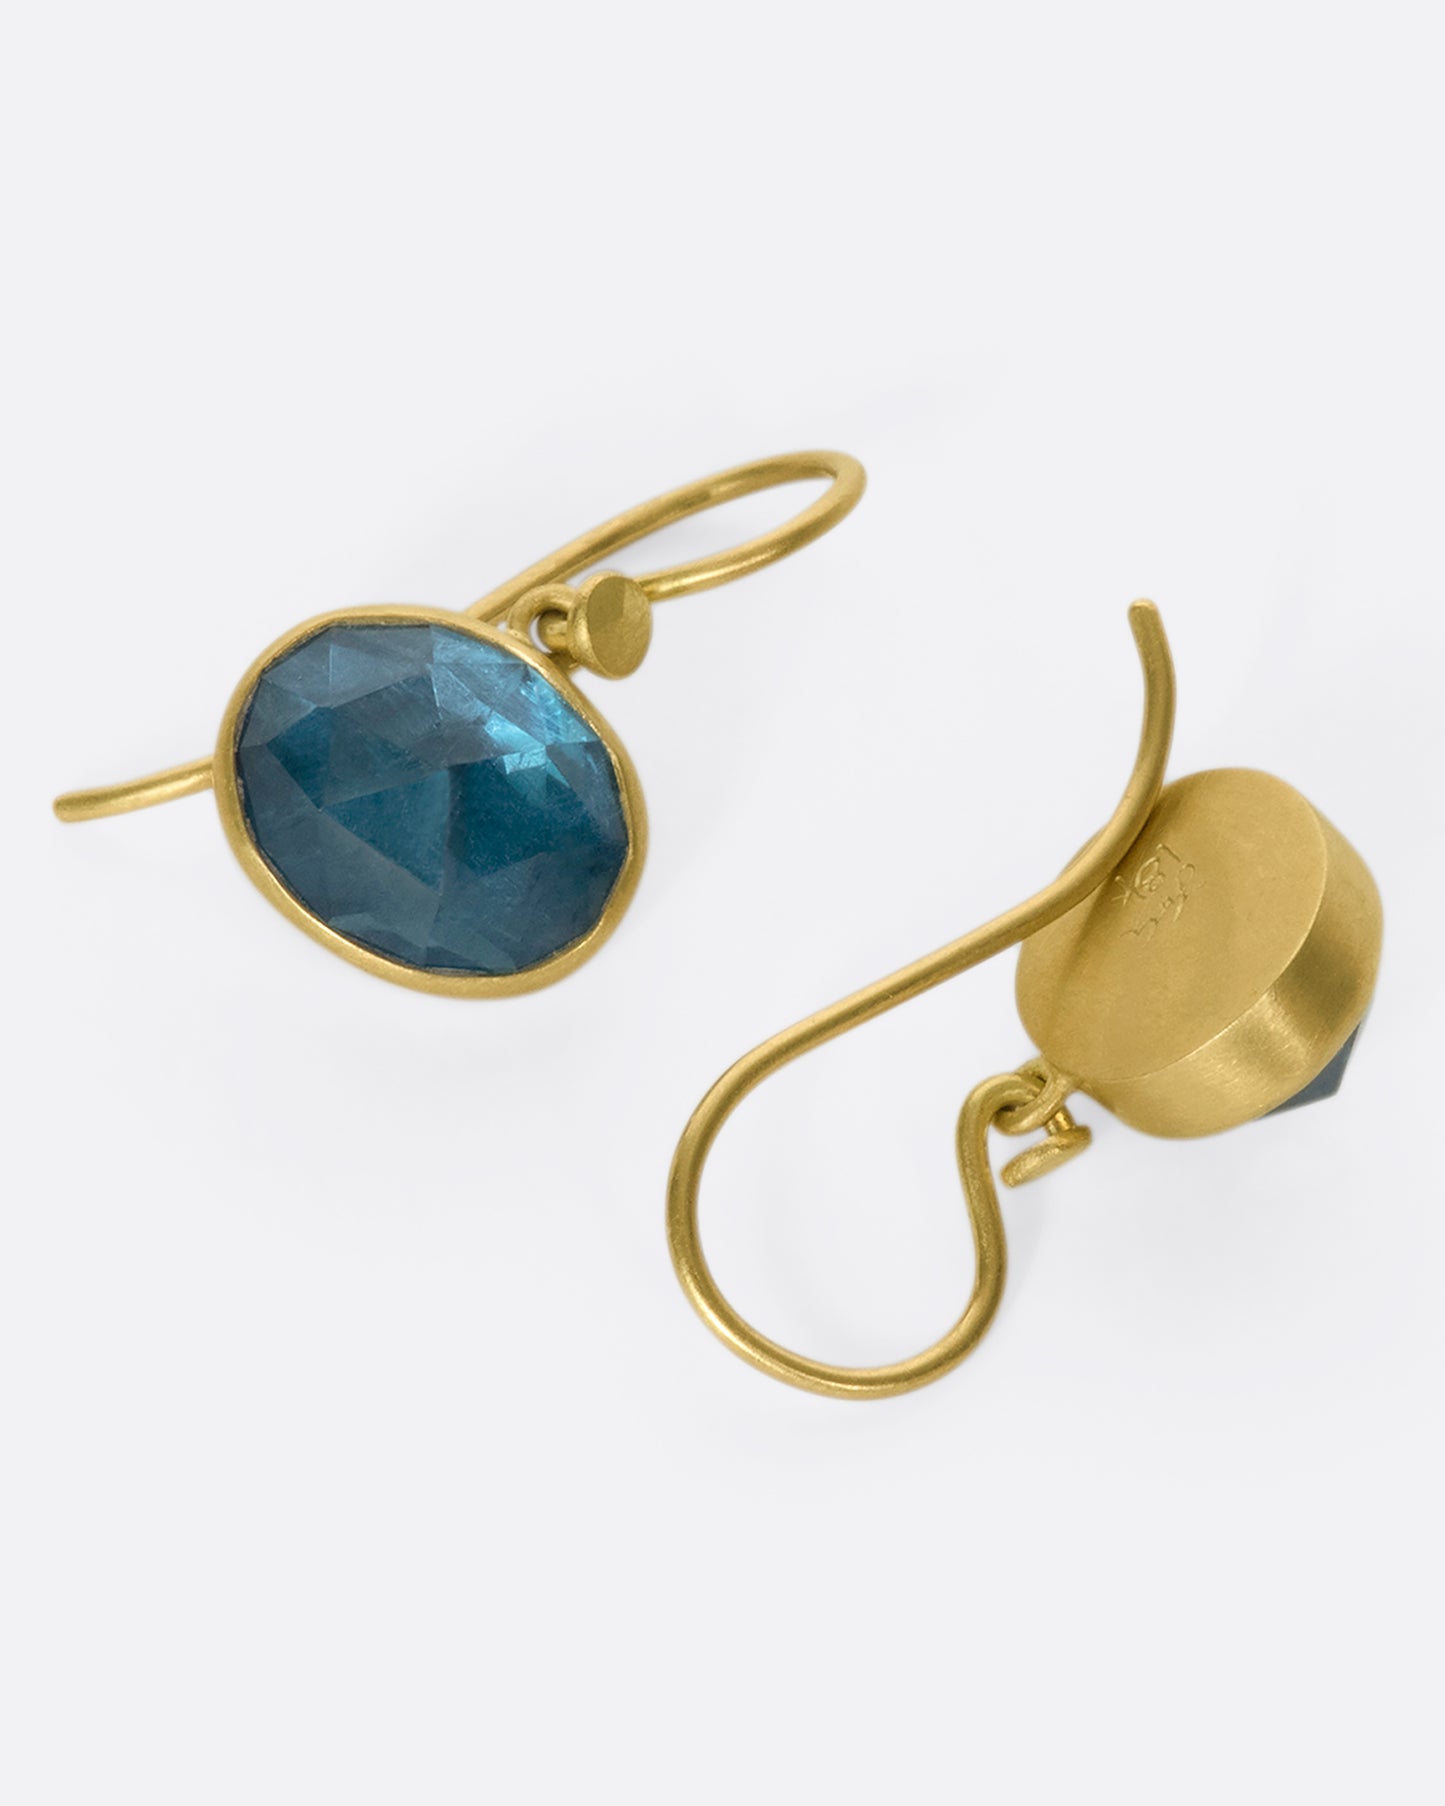 18k gold dangling earrings with oval London blue topaz drops. The rich blue topaz looks like sunlit water wrapped in a gold bezel setting.